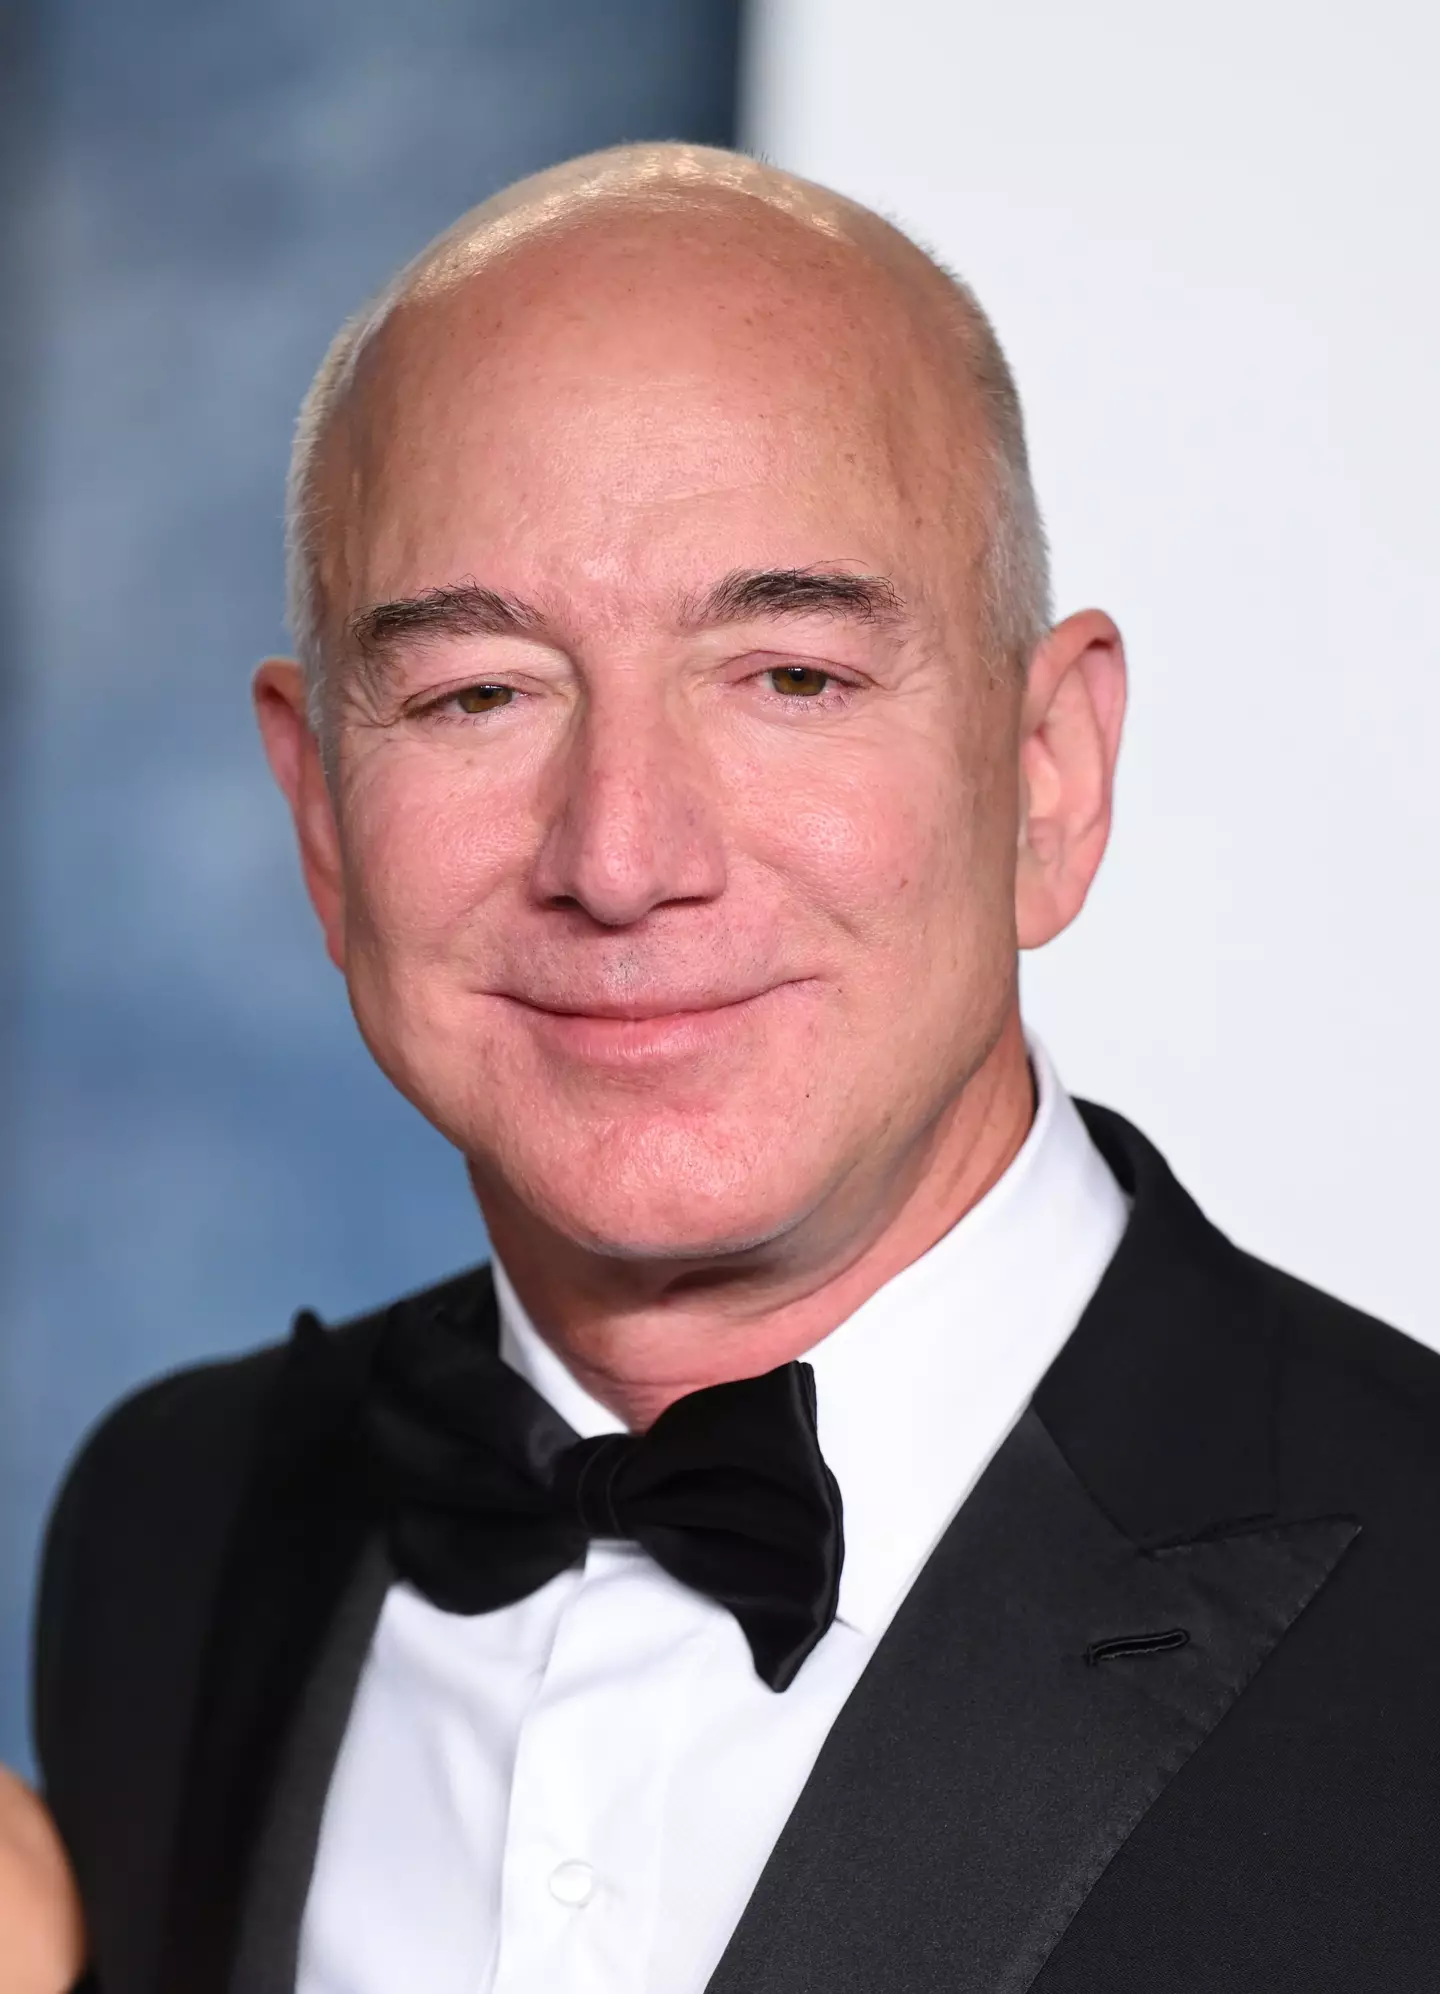 Jeff Bezos has once again taken the top spot.